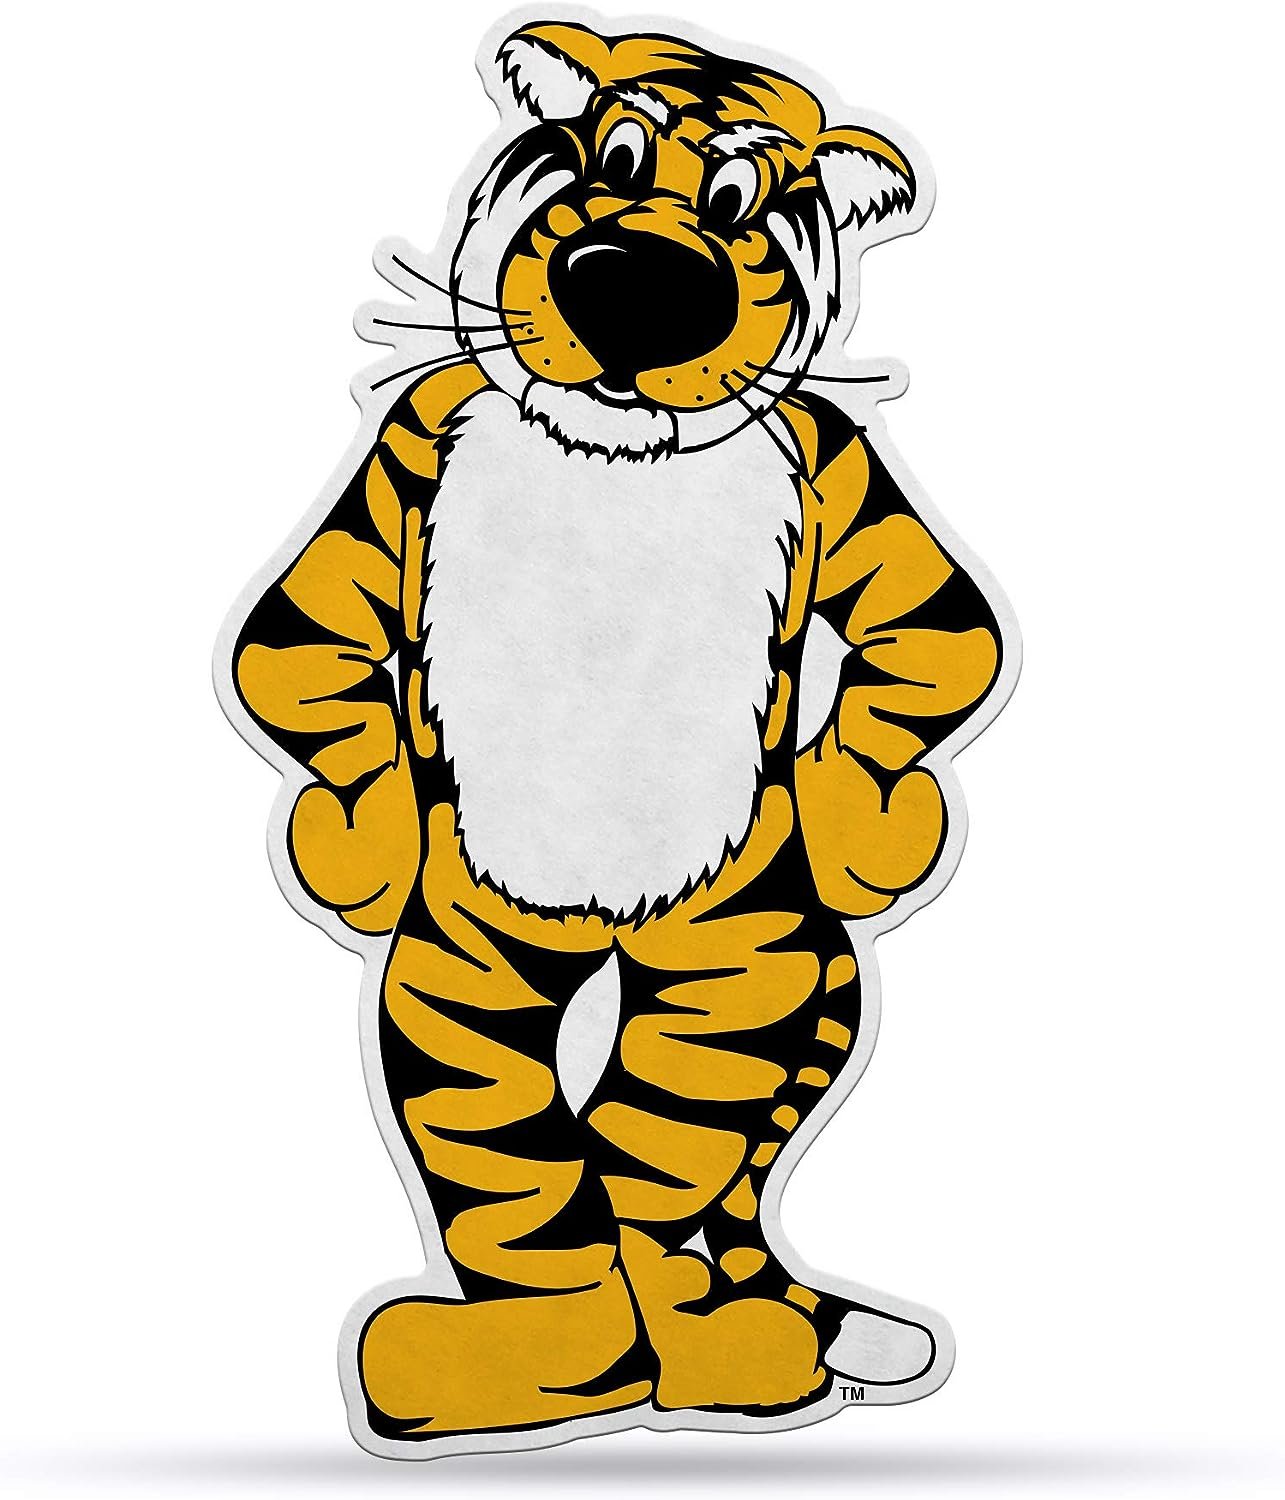 University of Missouri Tigers Soft Felt Wall Pennant, Mascot Design, 18 Inch, Easy to Hang